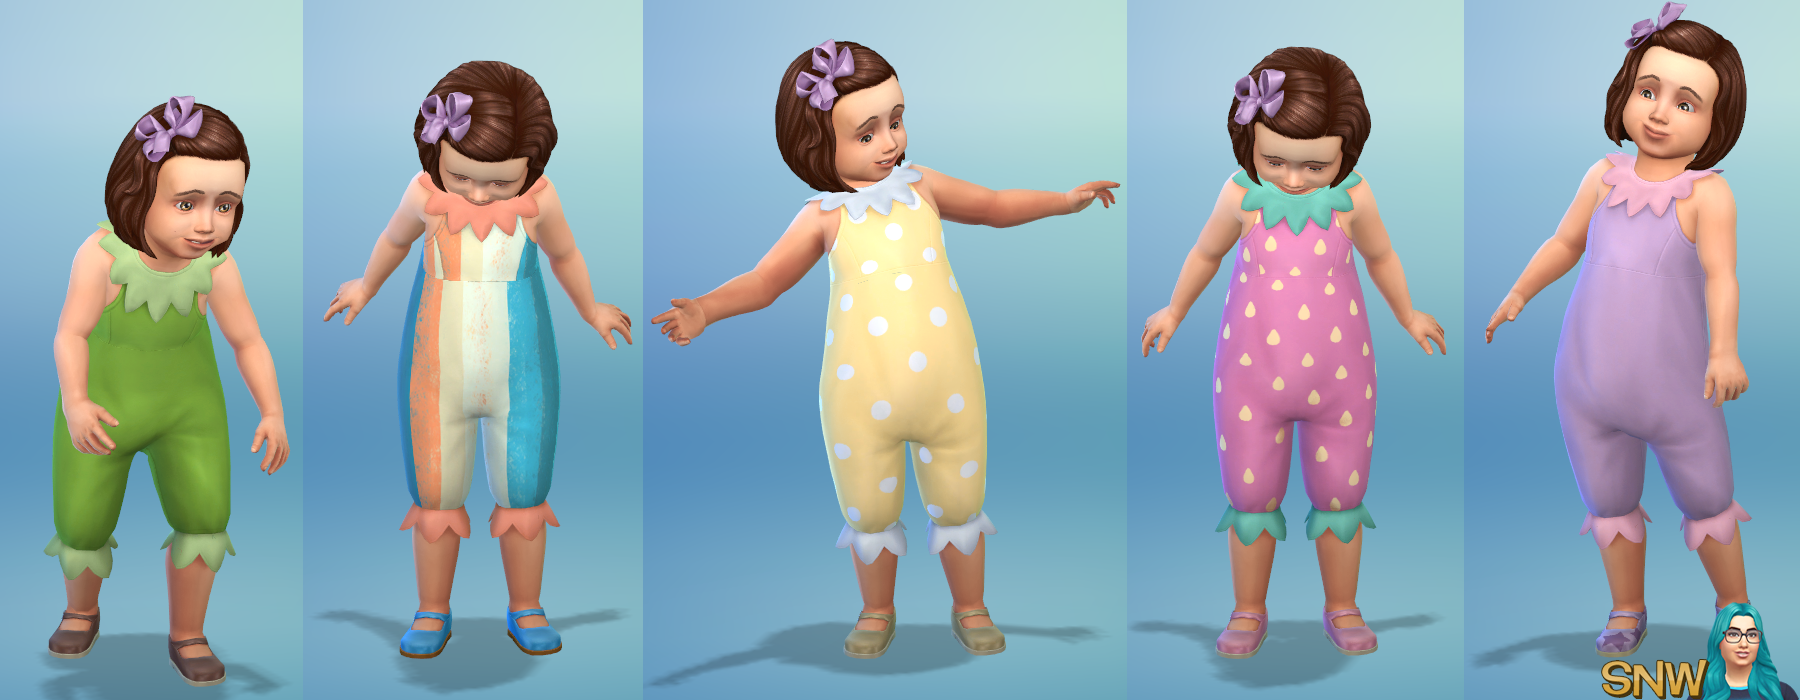 The Sims 4 Toddler Stuff: Official Description + Key Features